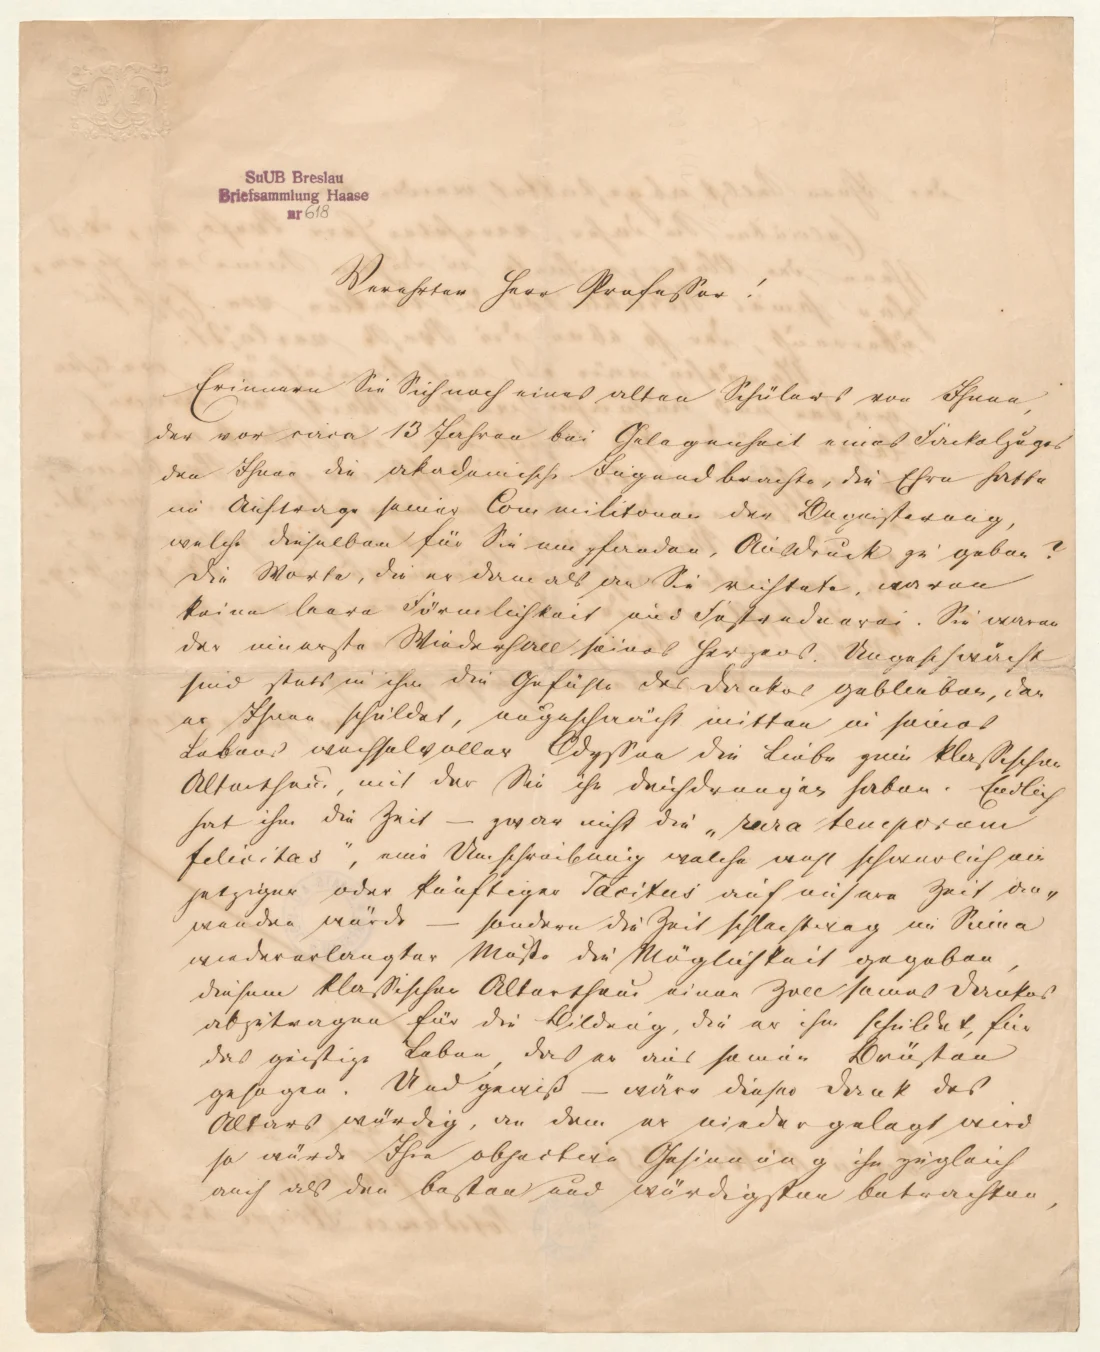 scan of a hand-written letter